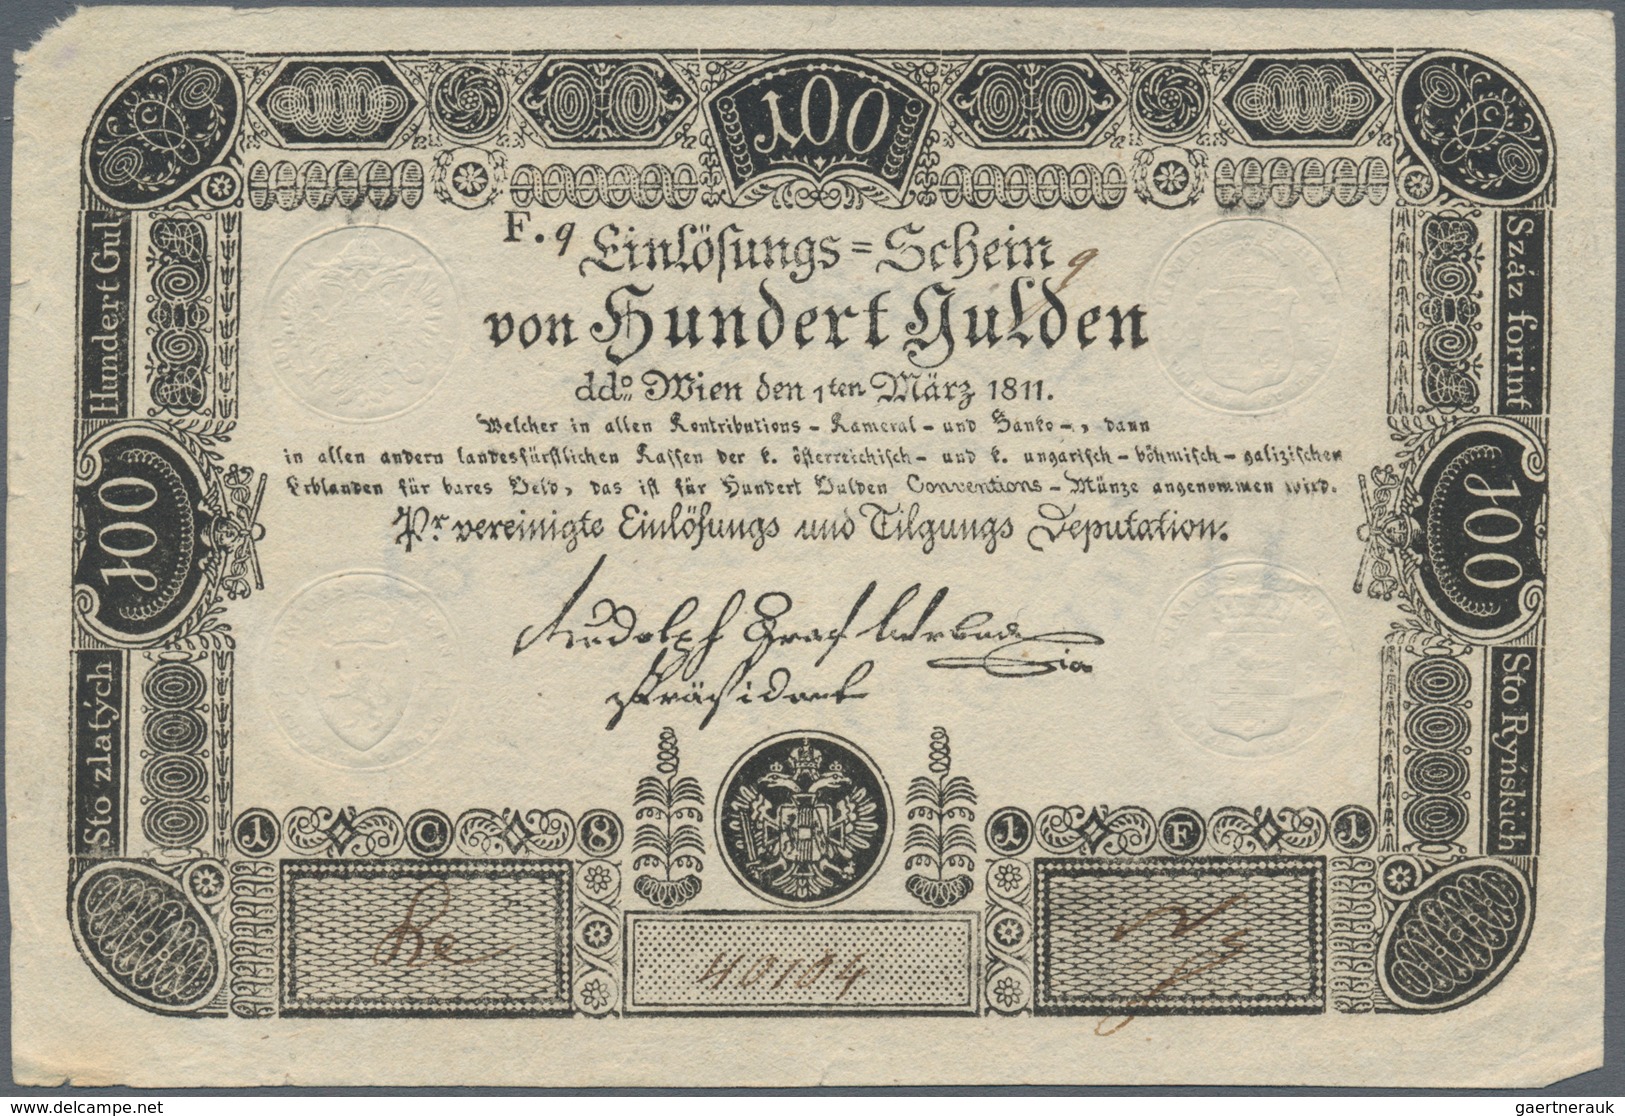 01048 Austria / Österreich: 100 Gulden 1811 Issued Note (not Formular) P. A49a, Highly Rare Banknote, Cent - Oostenrijk